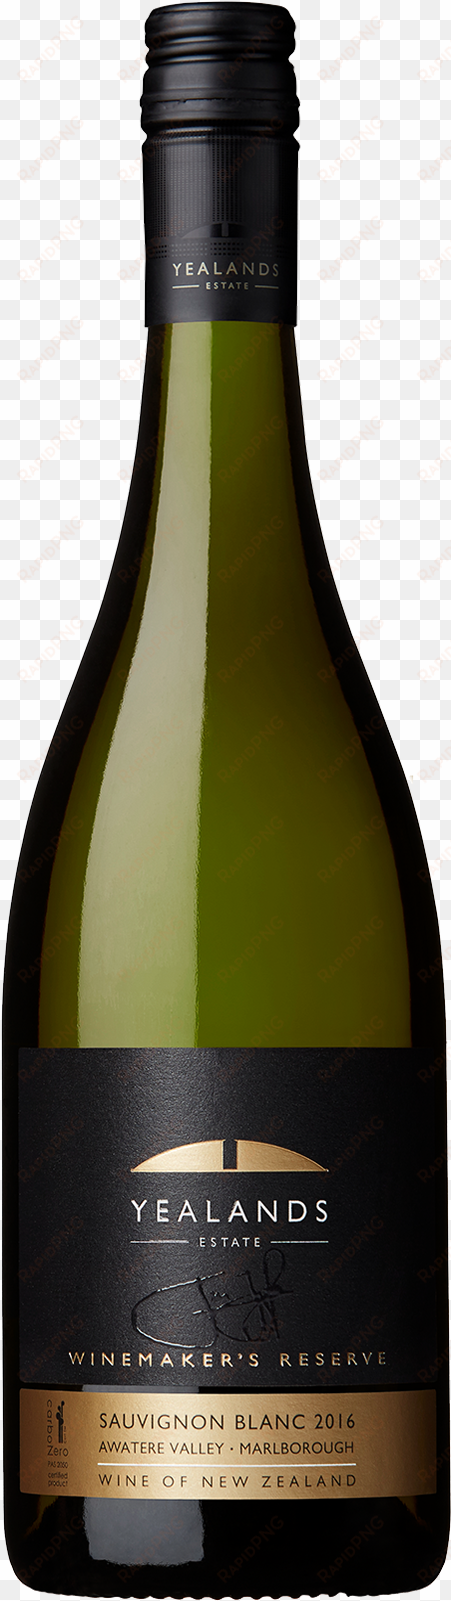 yealands estate - yealands estate single vineyard sauvignon blanc 2016